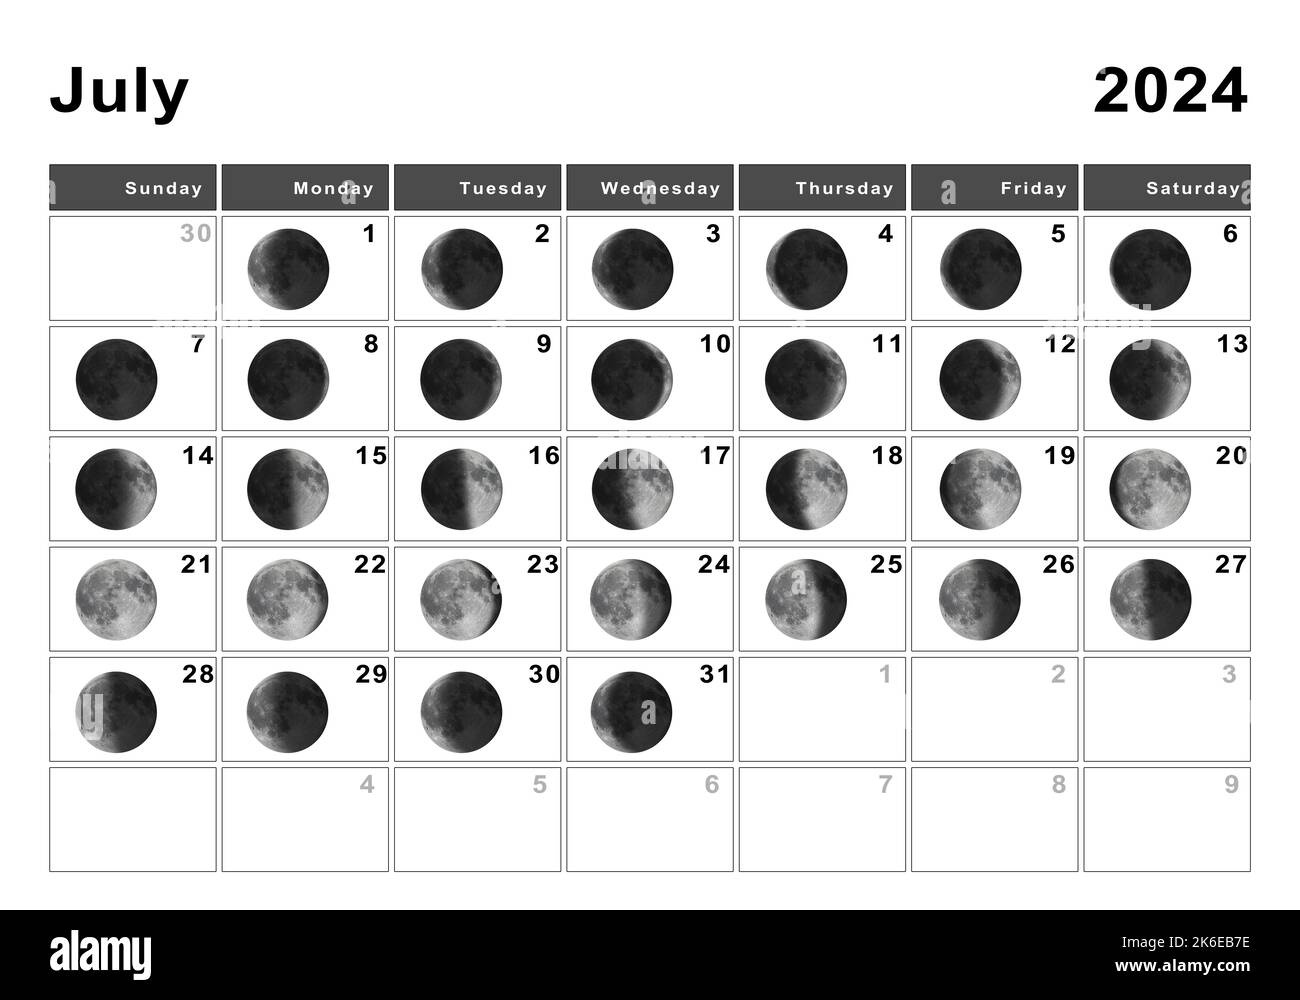 July 2024 Lunar Calendar, Moon Cycles, Moon Phases Stock Photo - Alamy in July 14Th Lunar Calendar 2024